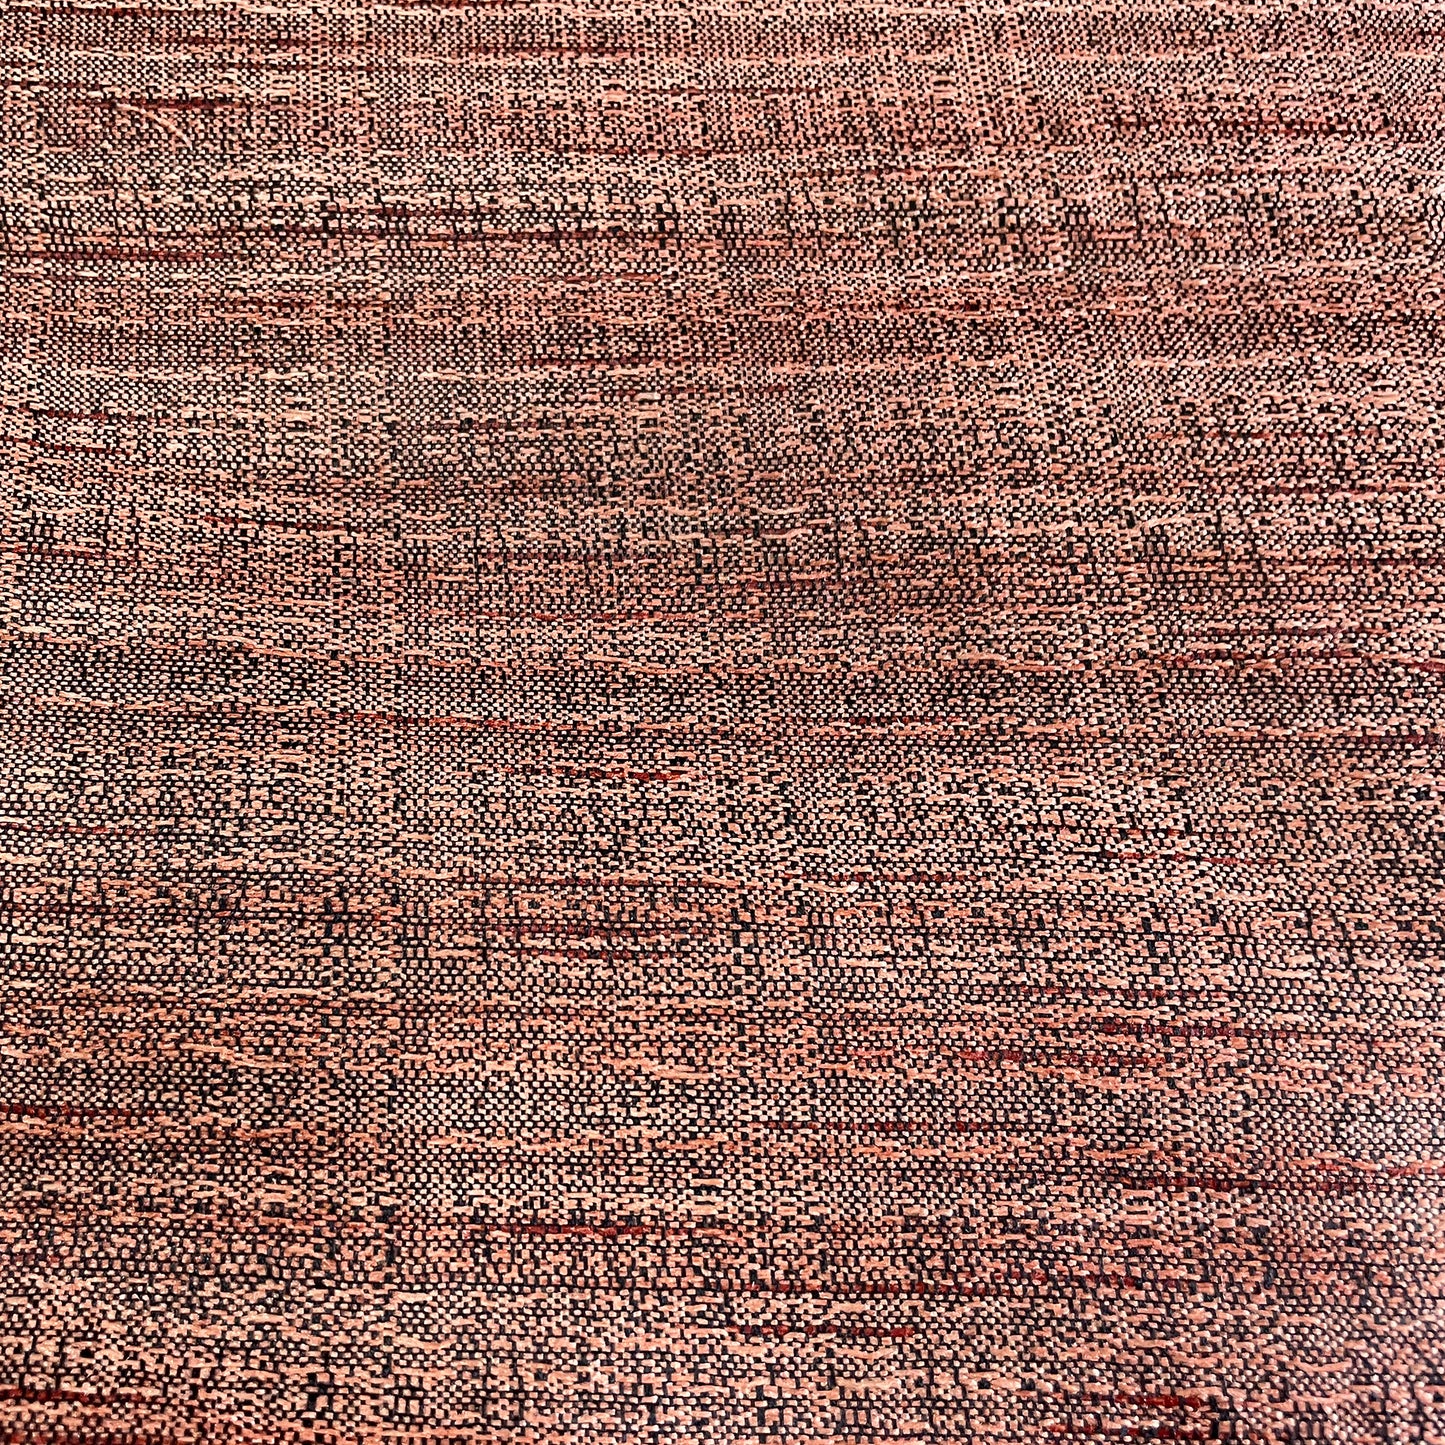 Nutmeg Brown Handloom Cotton Fabric